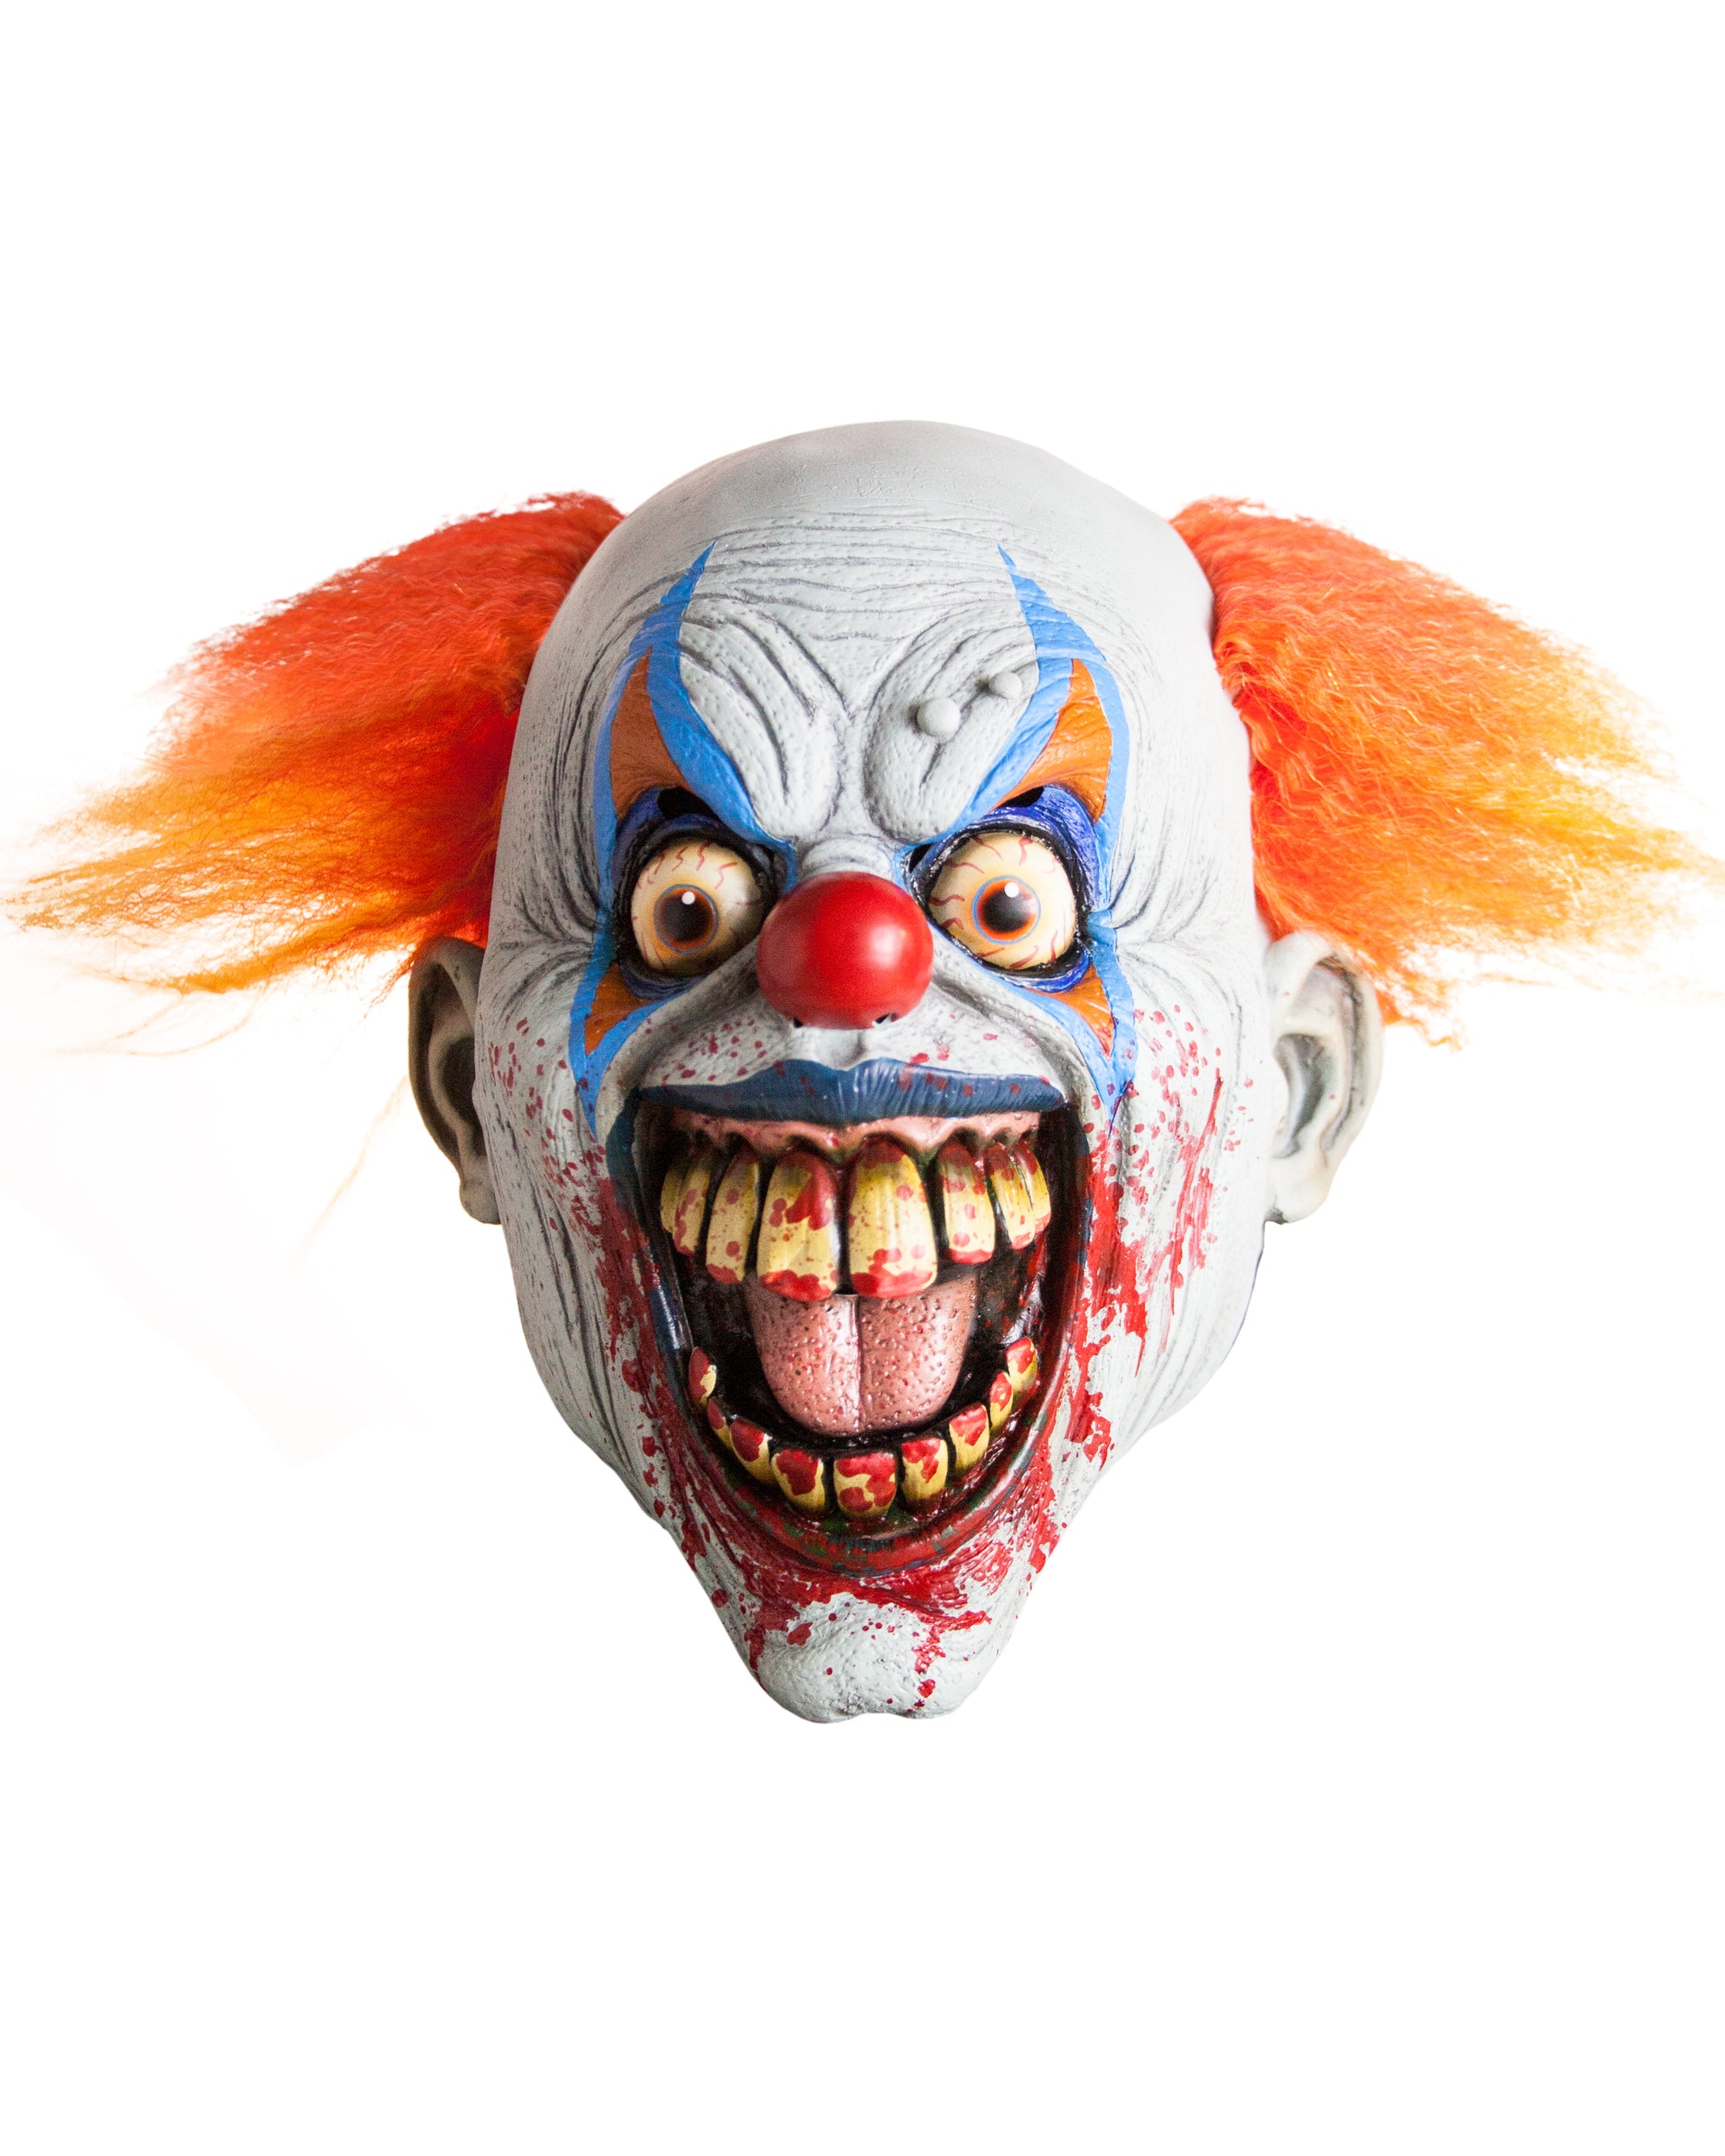 Shingles The Creepy Clown | Professional Halloween Scary Clown Mask